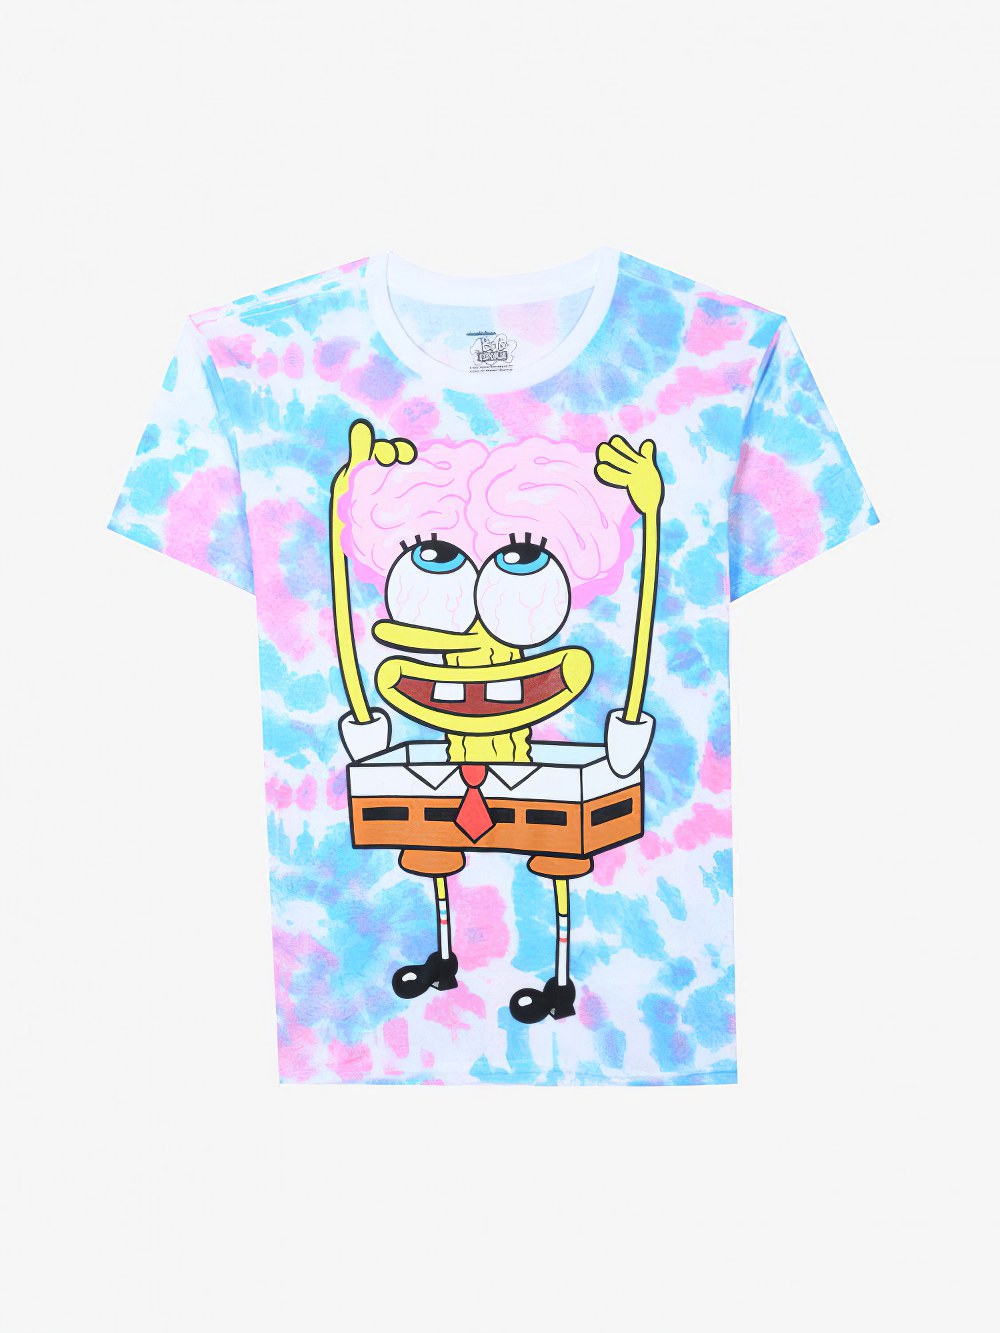 Gangster Spongebob 3 Shirt Multi Color Full Size Up To 5xl